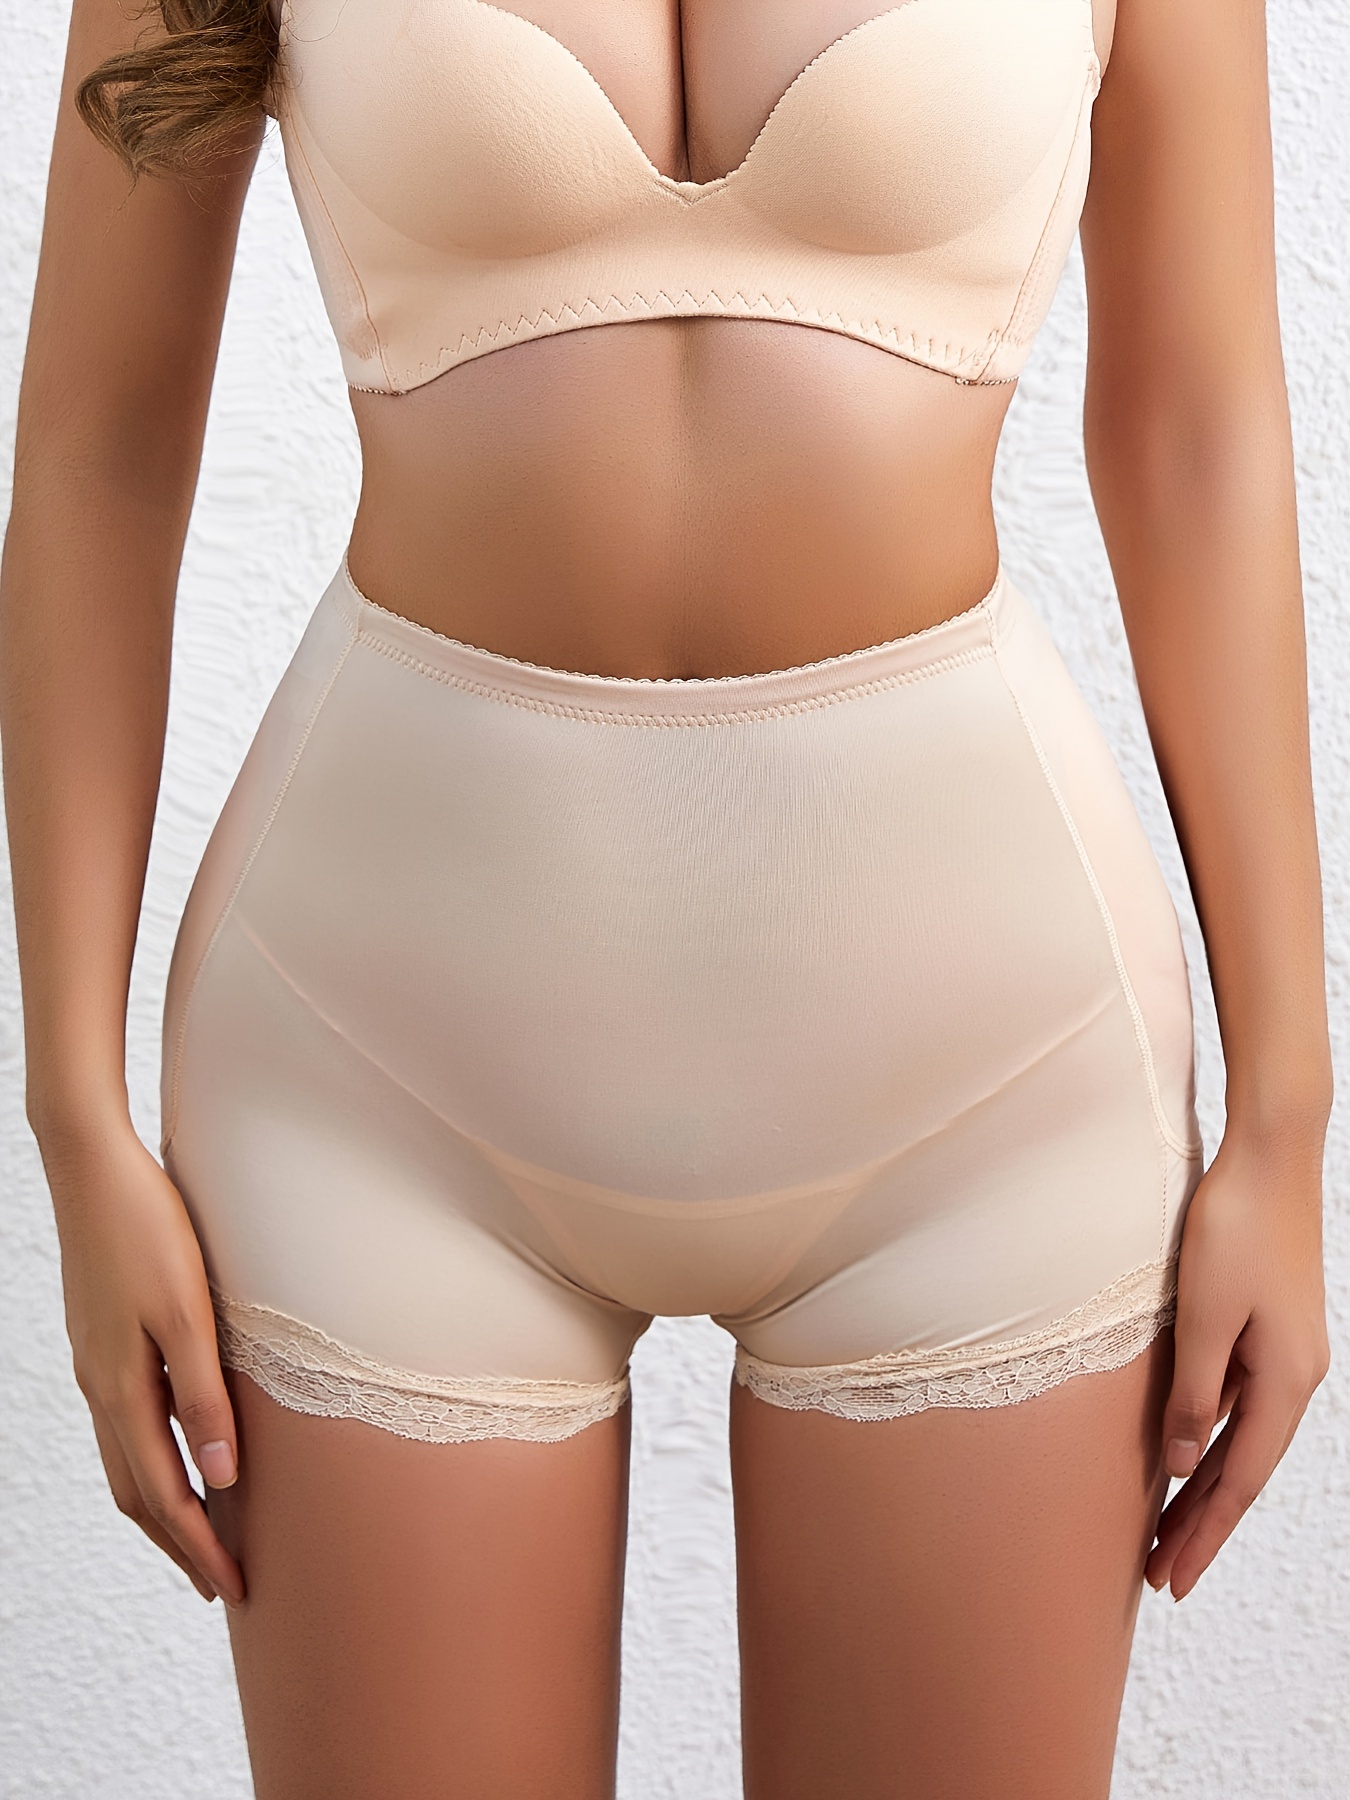 1/6 Scale Female Underwear Underpant Seamless Bra Briefs Set Model